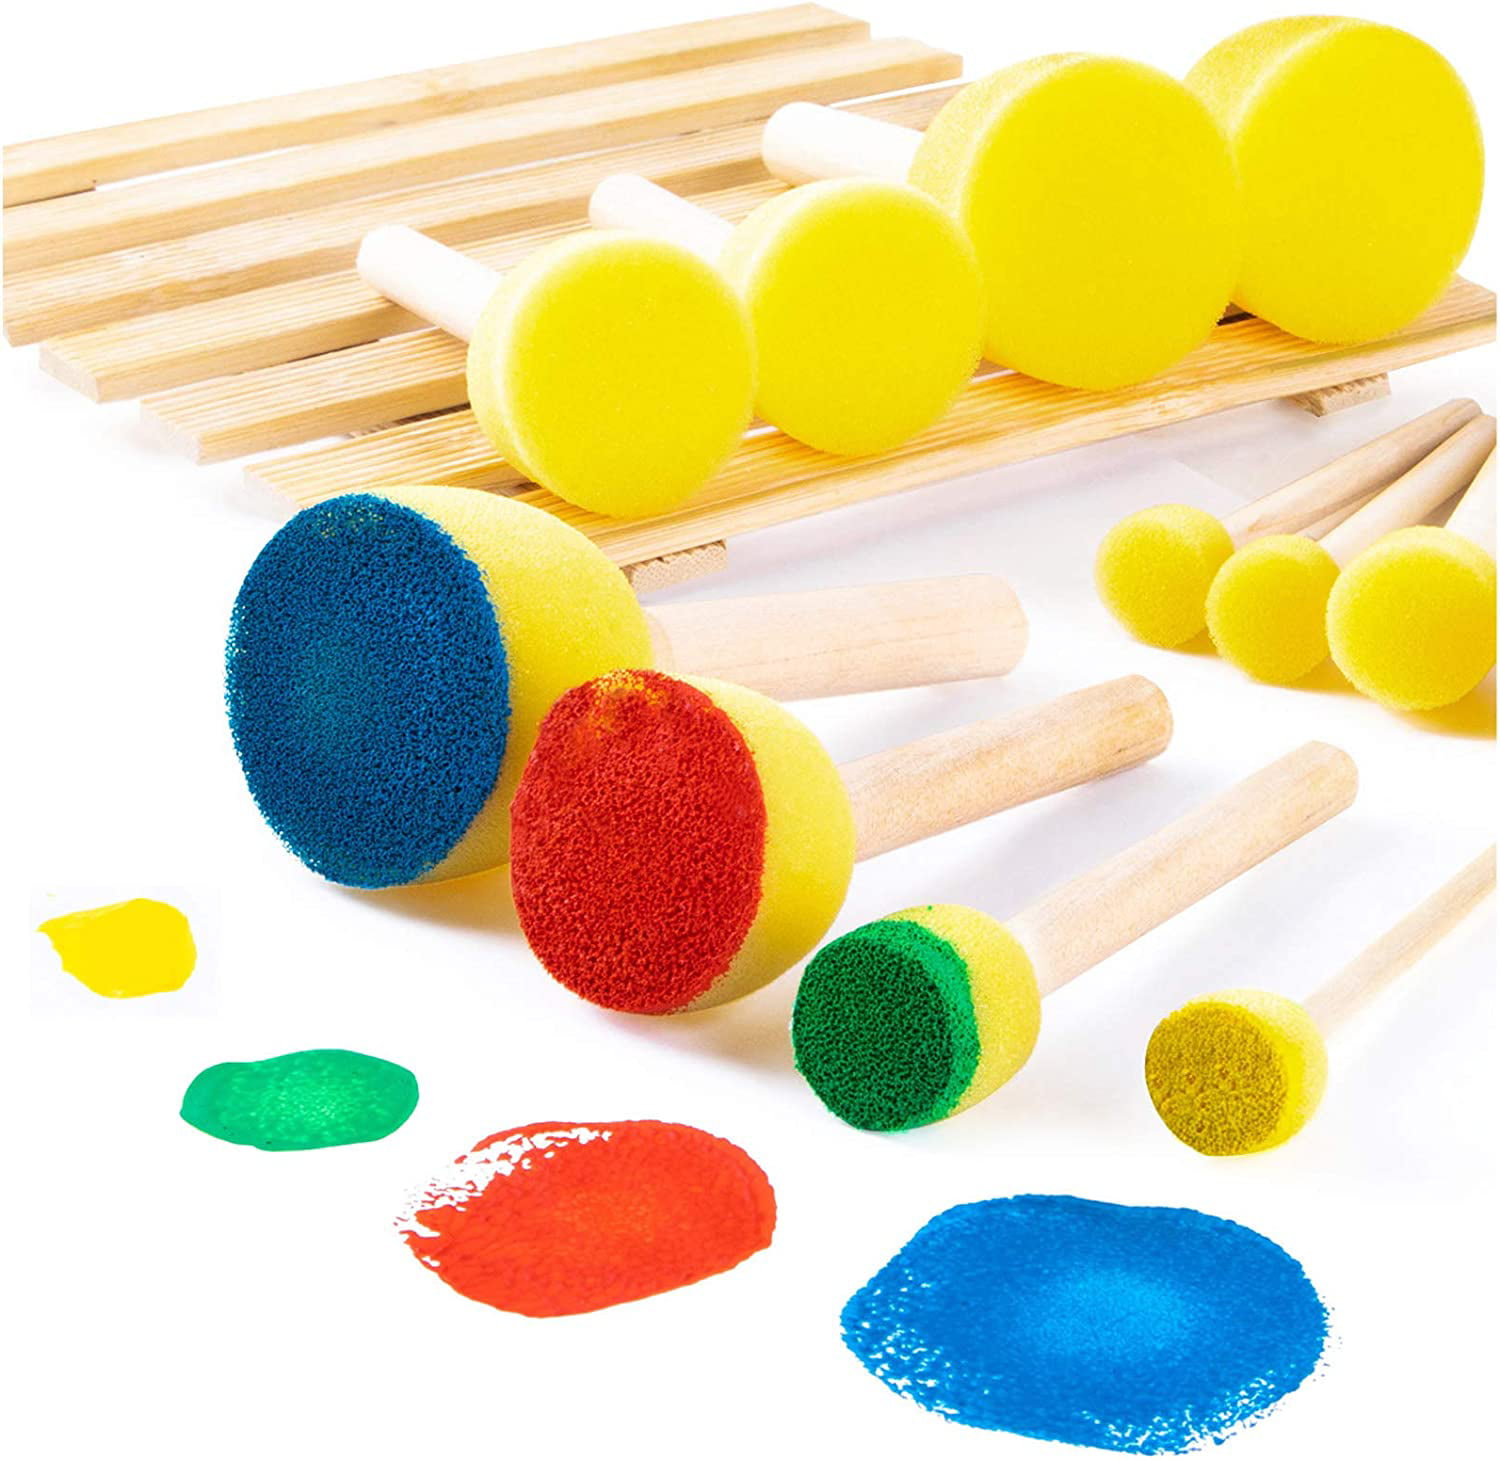 Hztyyier 4pcs round stencil sponge wooden handle foam sponge paint brush  furniture art crafts painting tool supplies